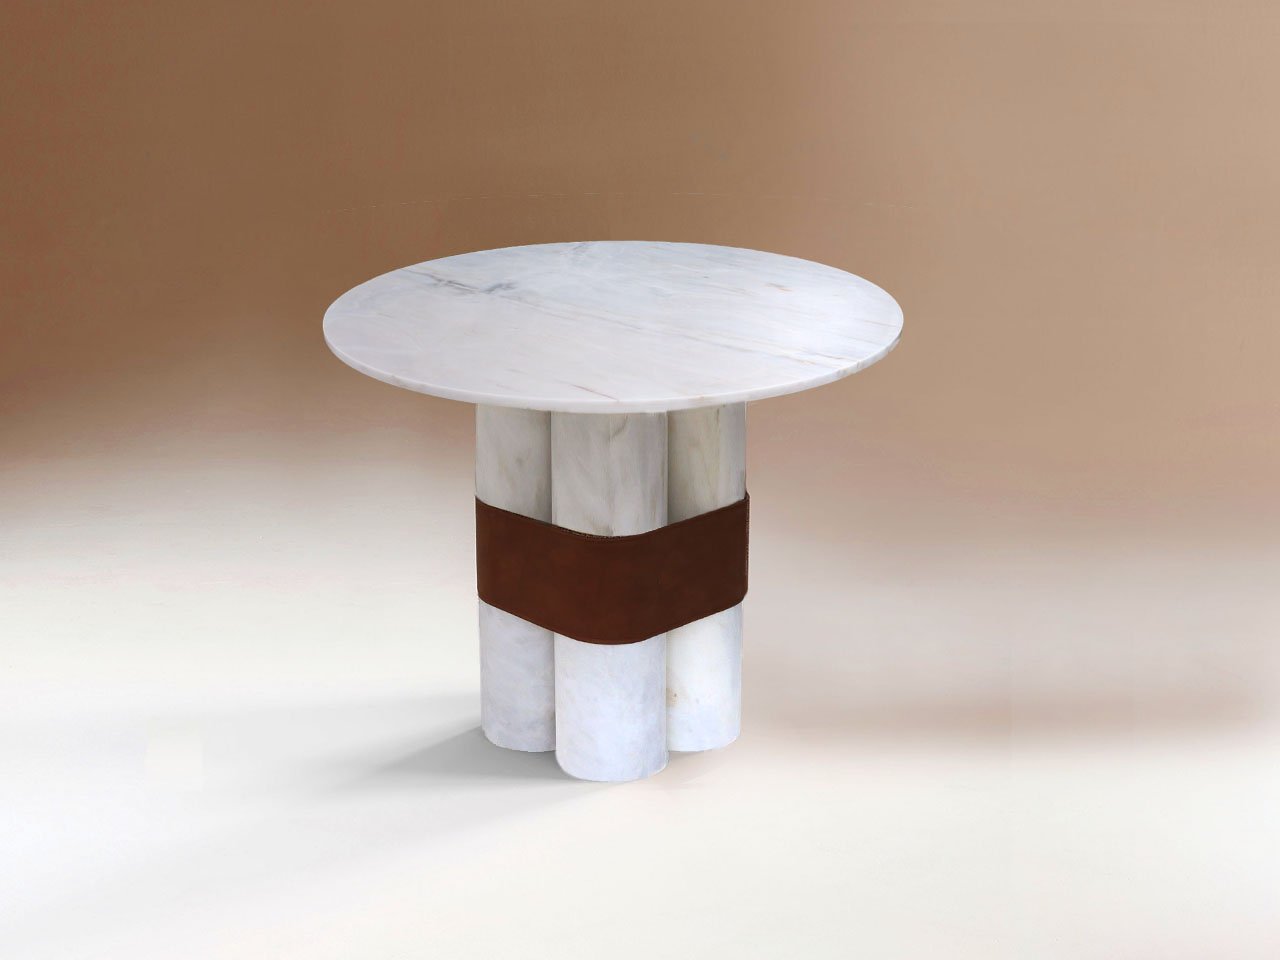 Axis marble side table Dovain studio Sergio Prieto - cópia.jpg